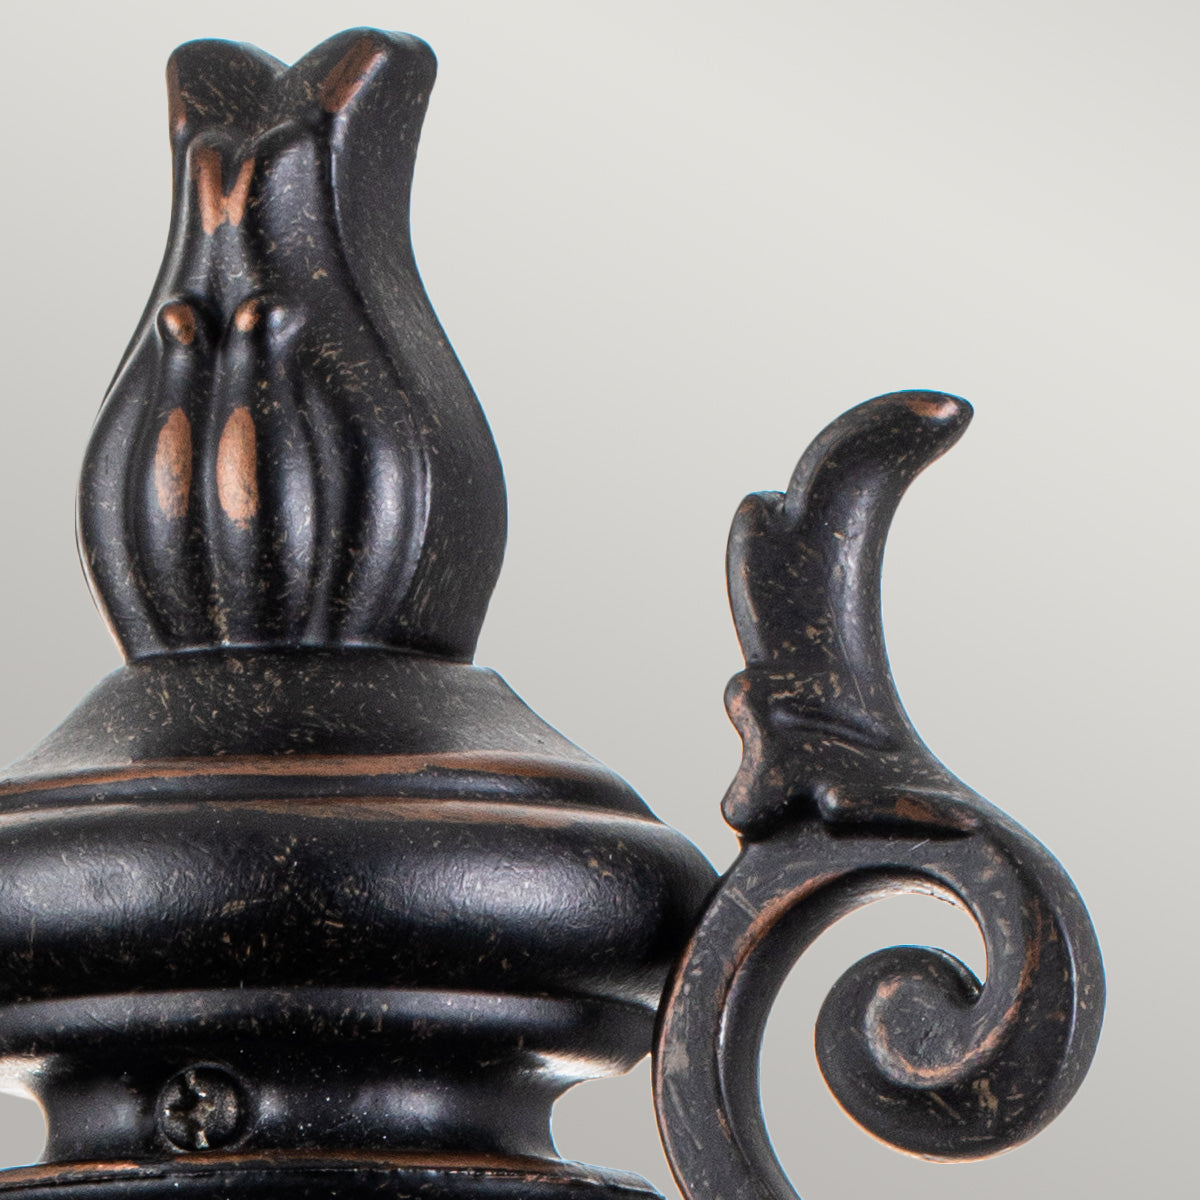 Baltimore Medium Half Lantern – Weathered Bronze Finish